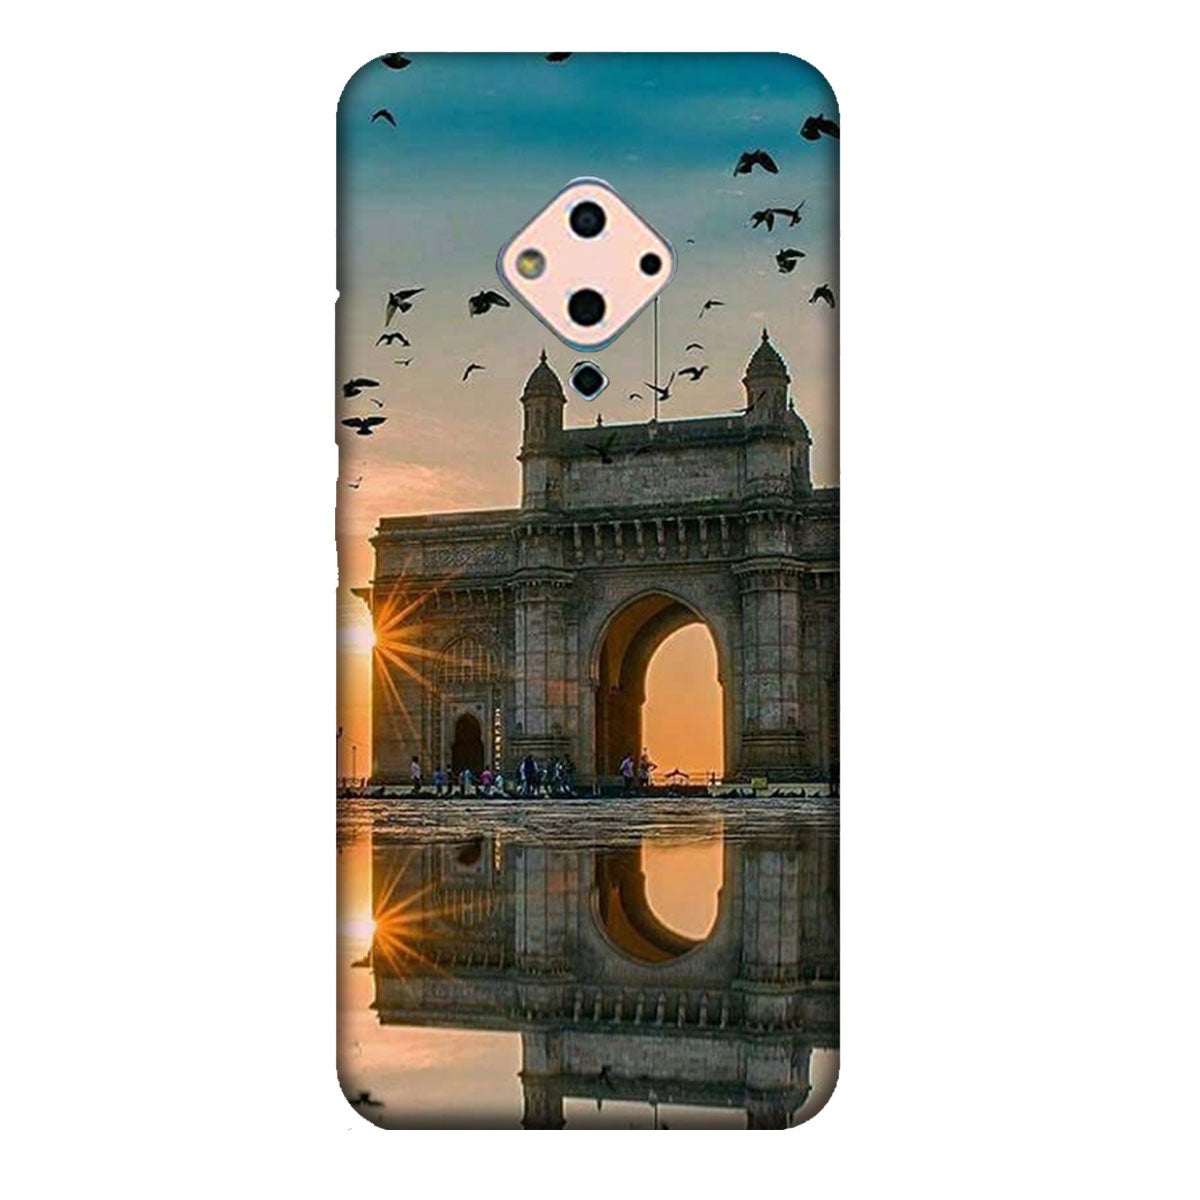 Gateway of India - Mumbai - Mobile Phone Cover - Hard Case - Vivo